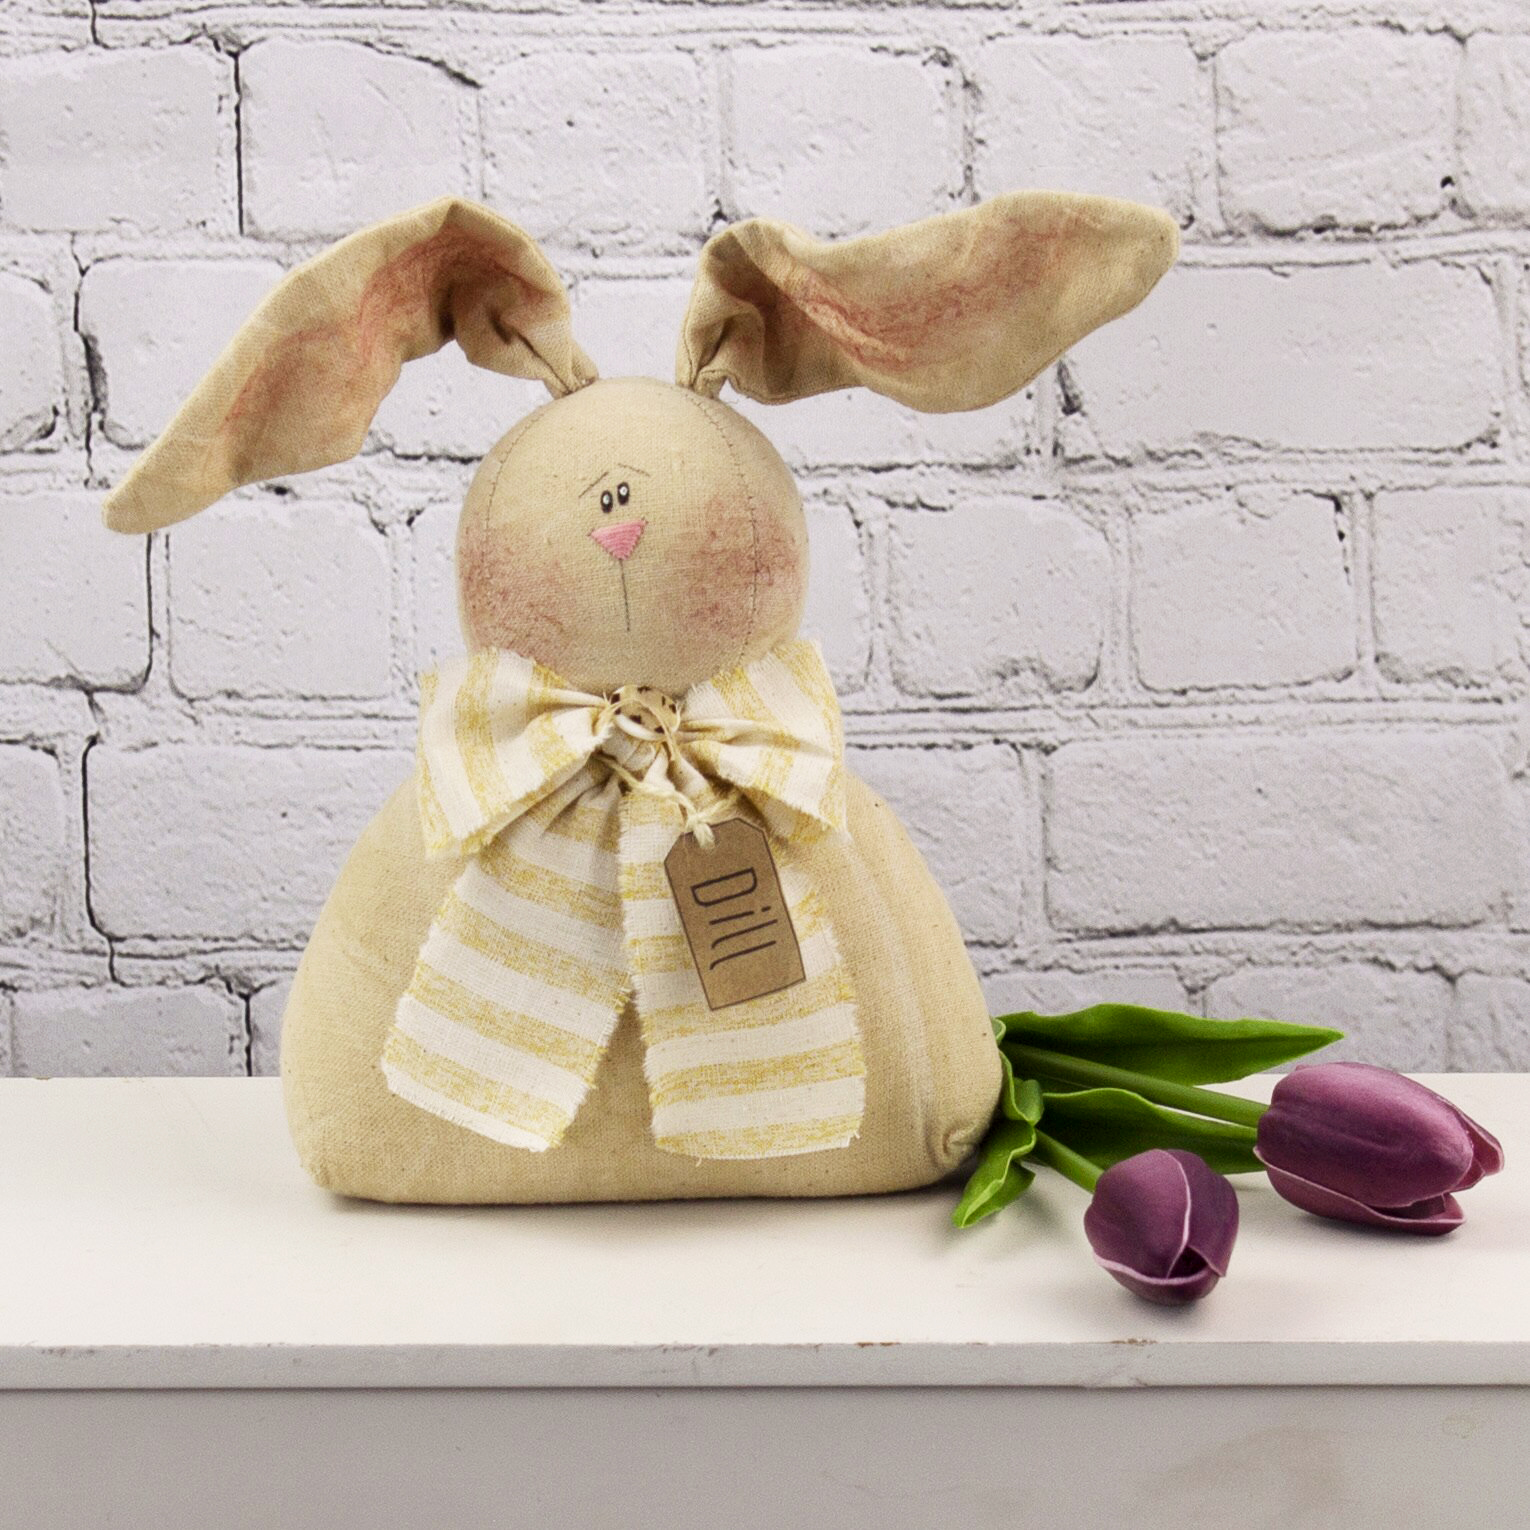 New Primitive Country Folk Art GRUNGY LONG LEGS BUNNY Rabbit Easter Doll Figure 